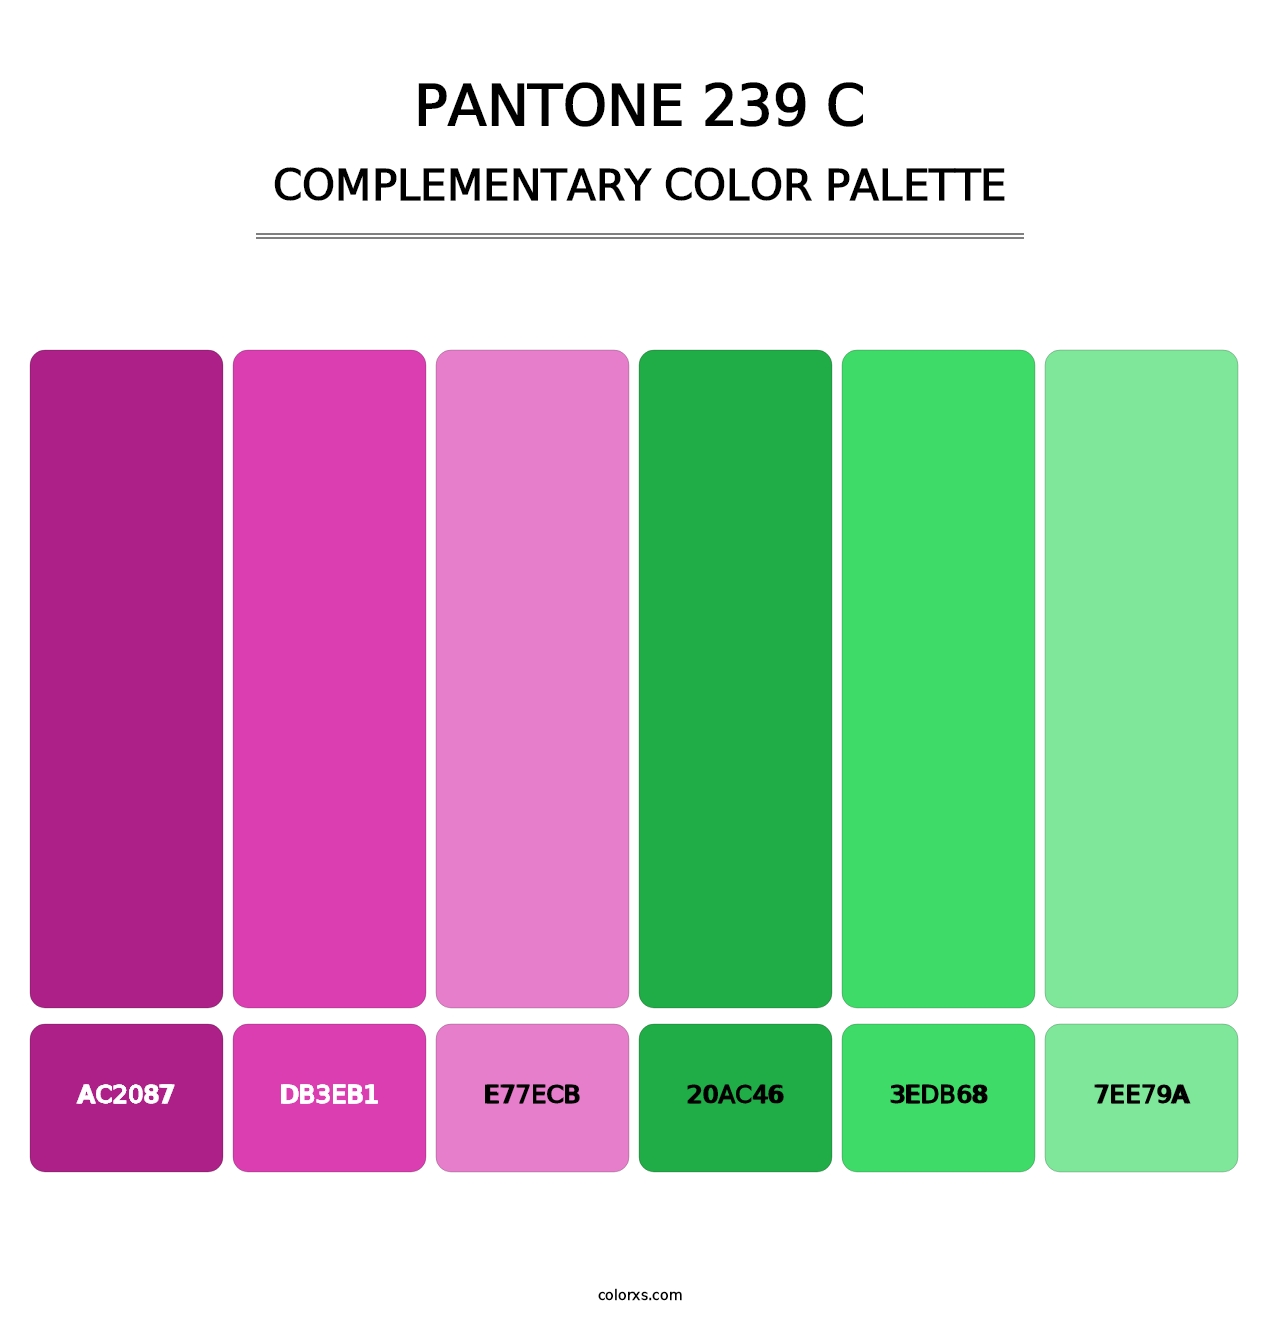 PANTONE 239 C - Complementary Color Palette